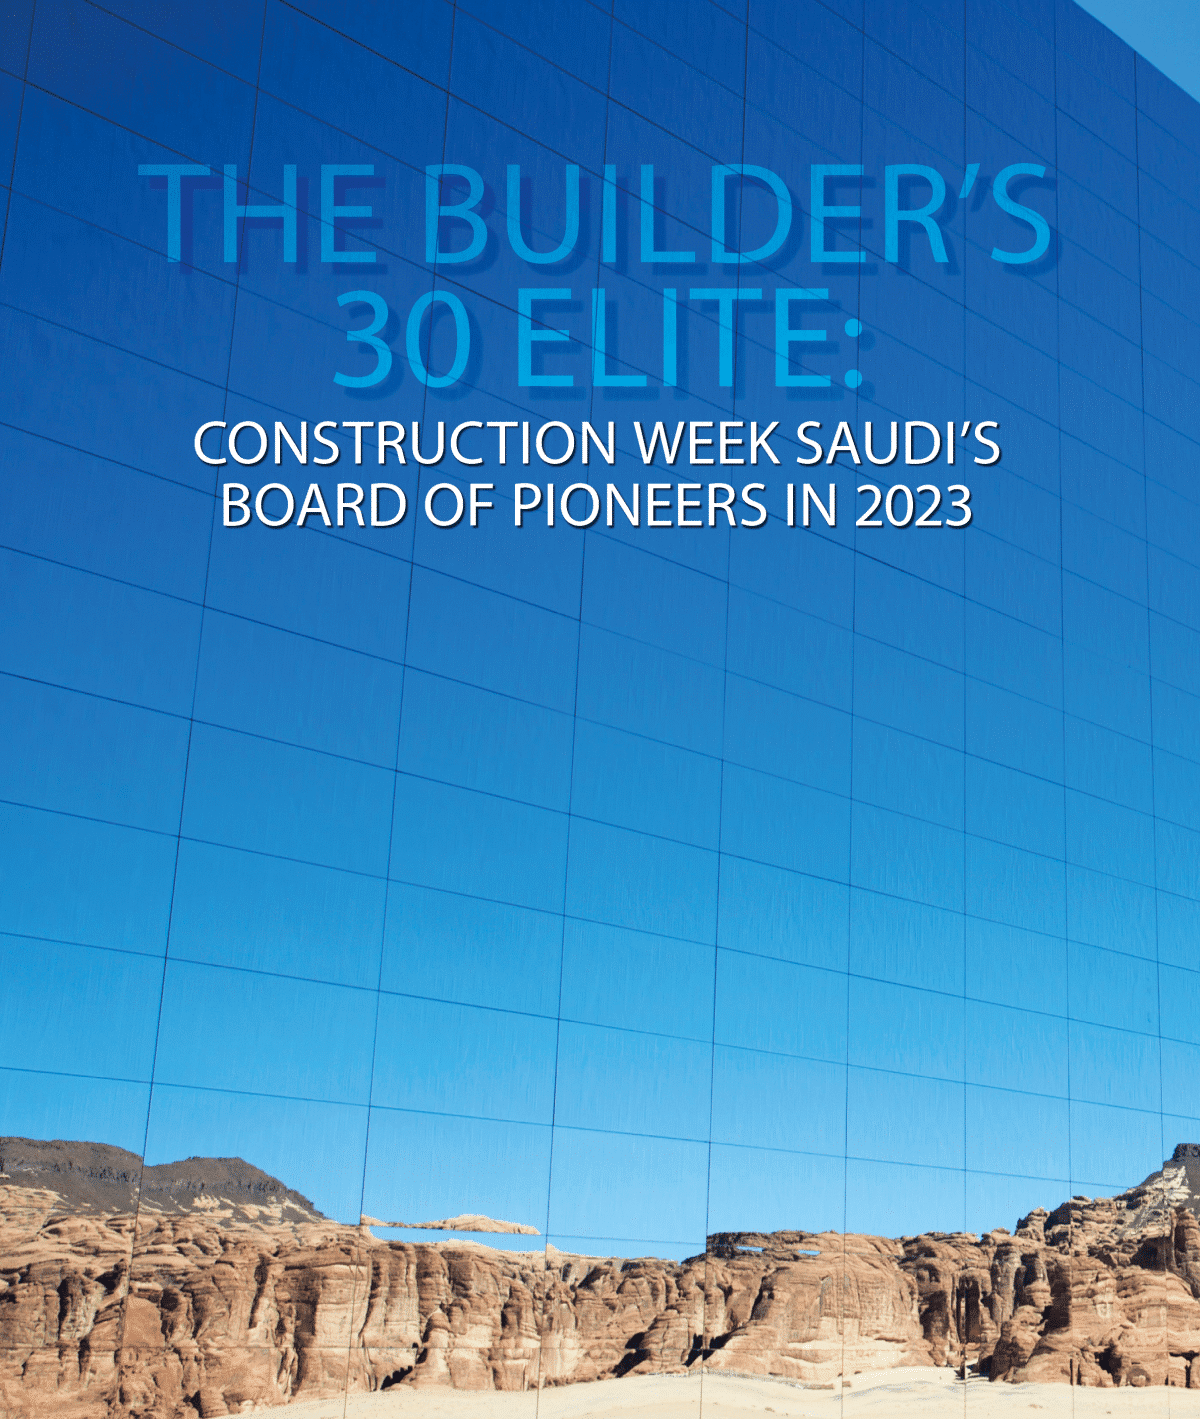  The Builder’s 30 Elite: Construction Week Saudi’s Board of Pioneers 2023